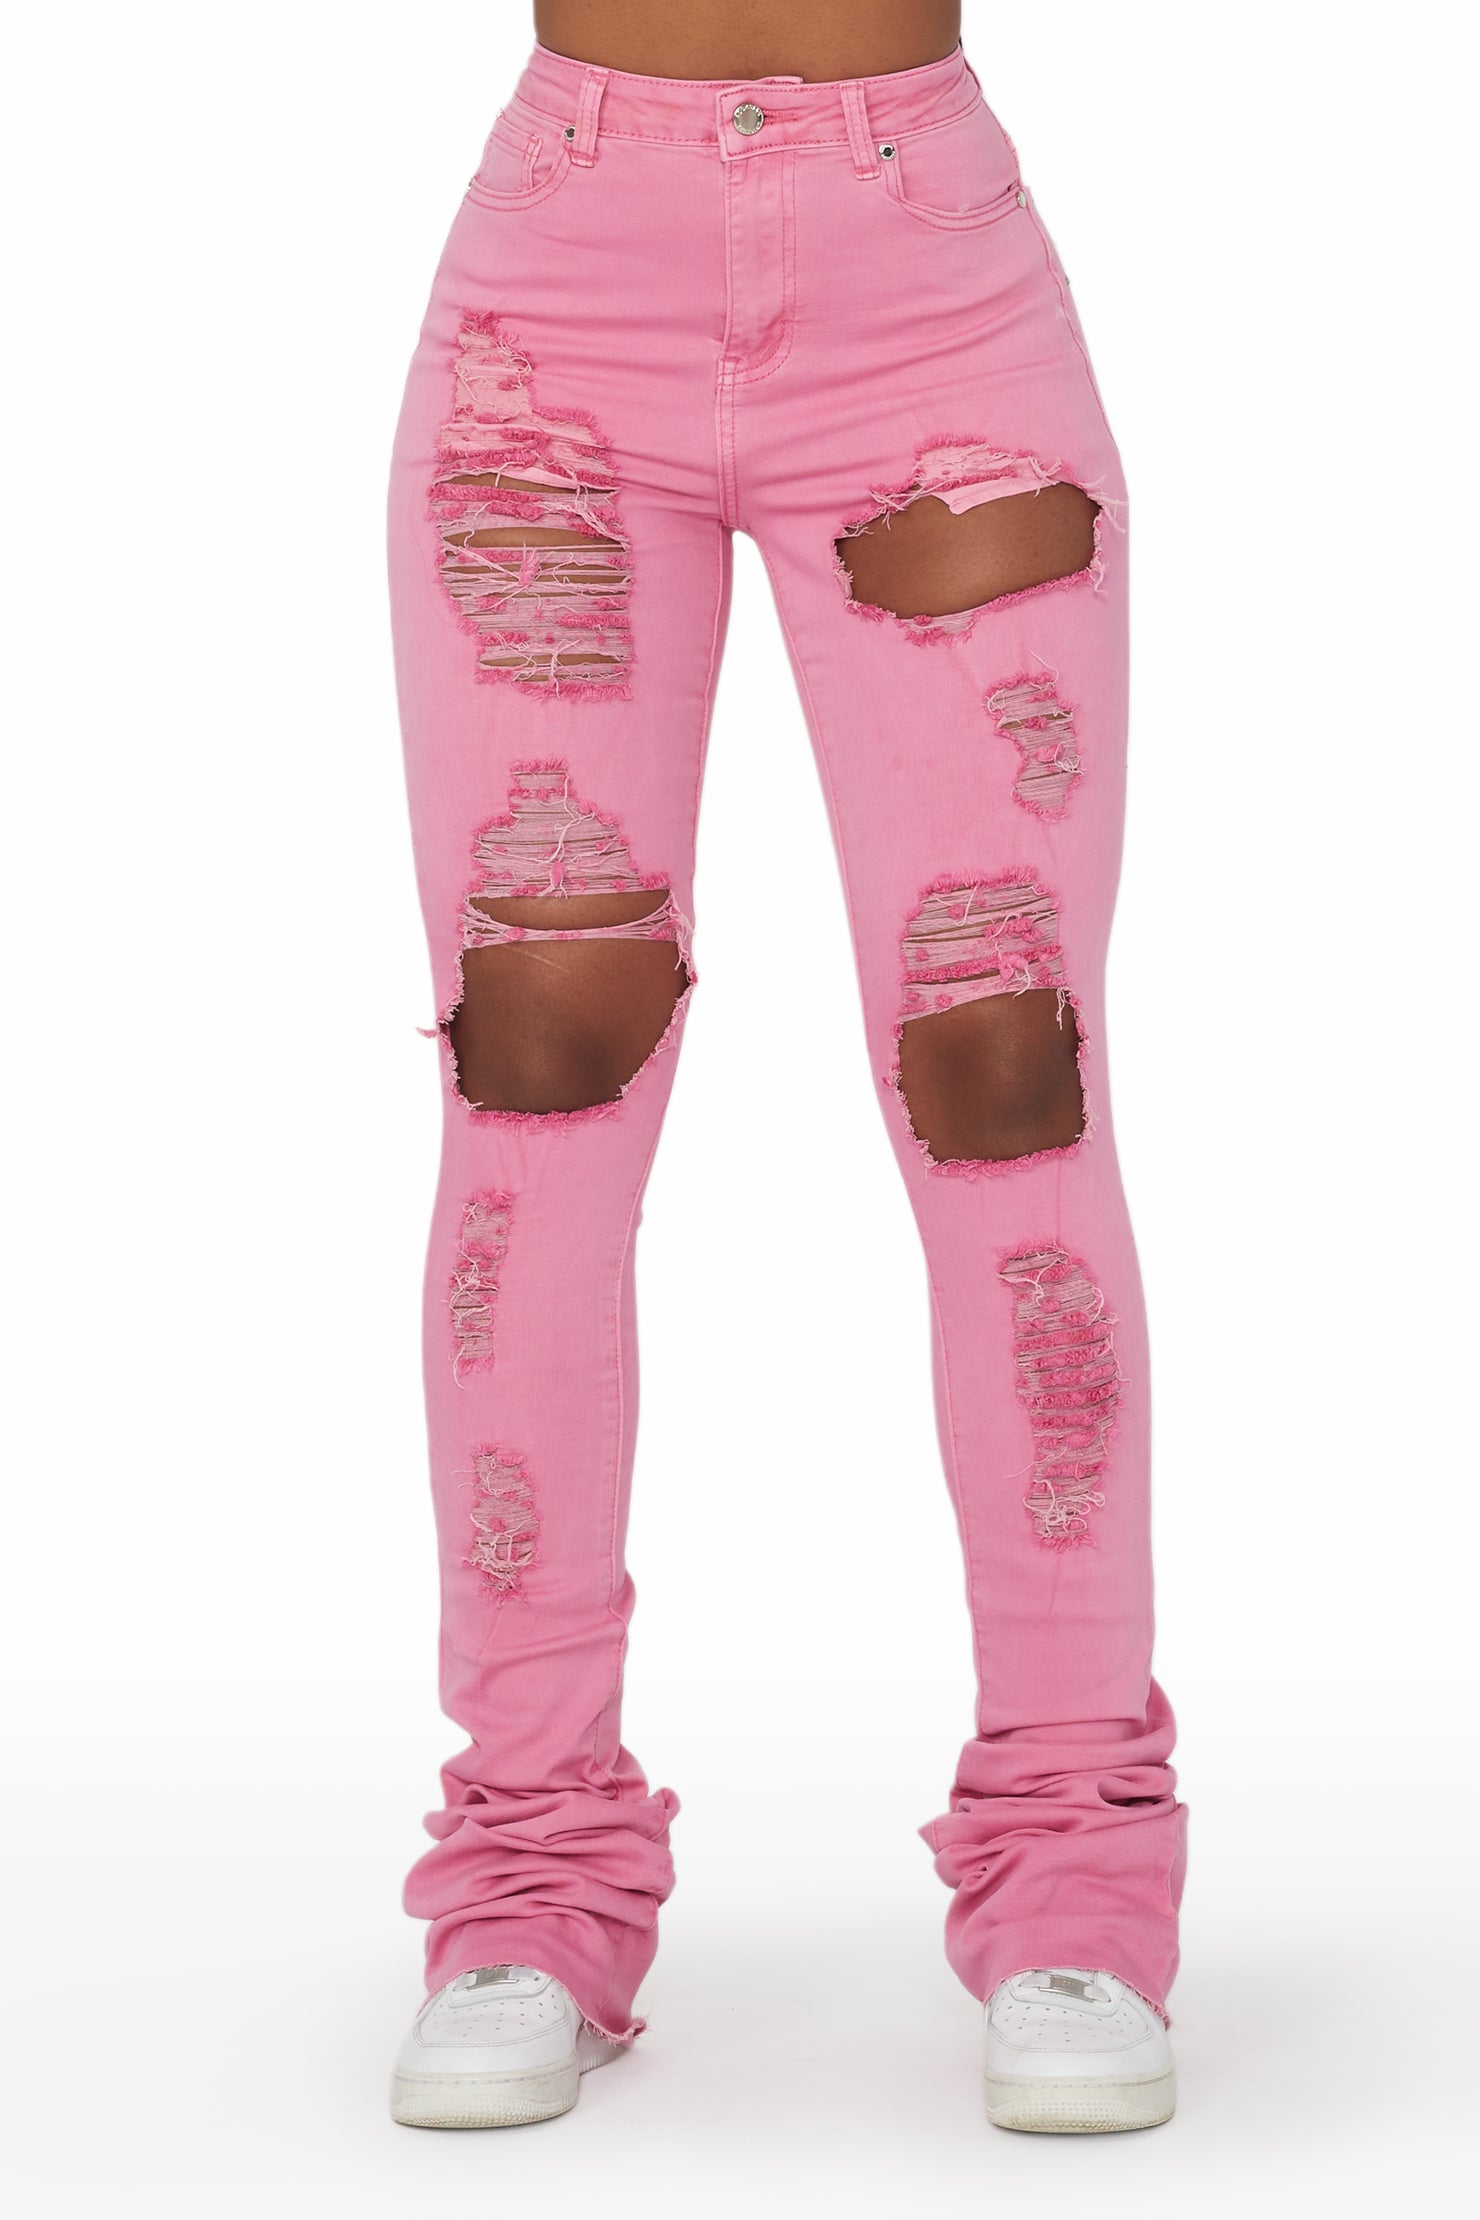 Lovin' Pink Distressed Super Stacked Jean